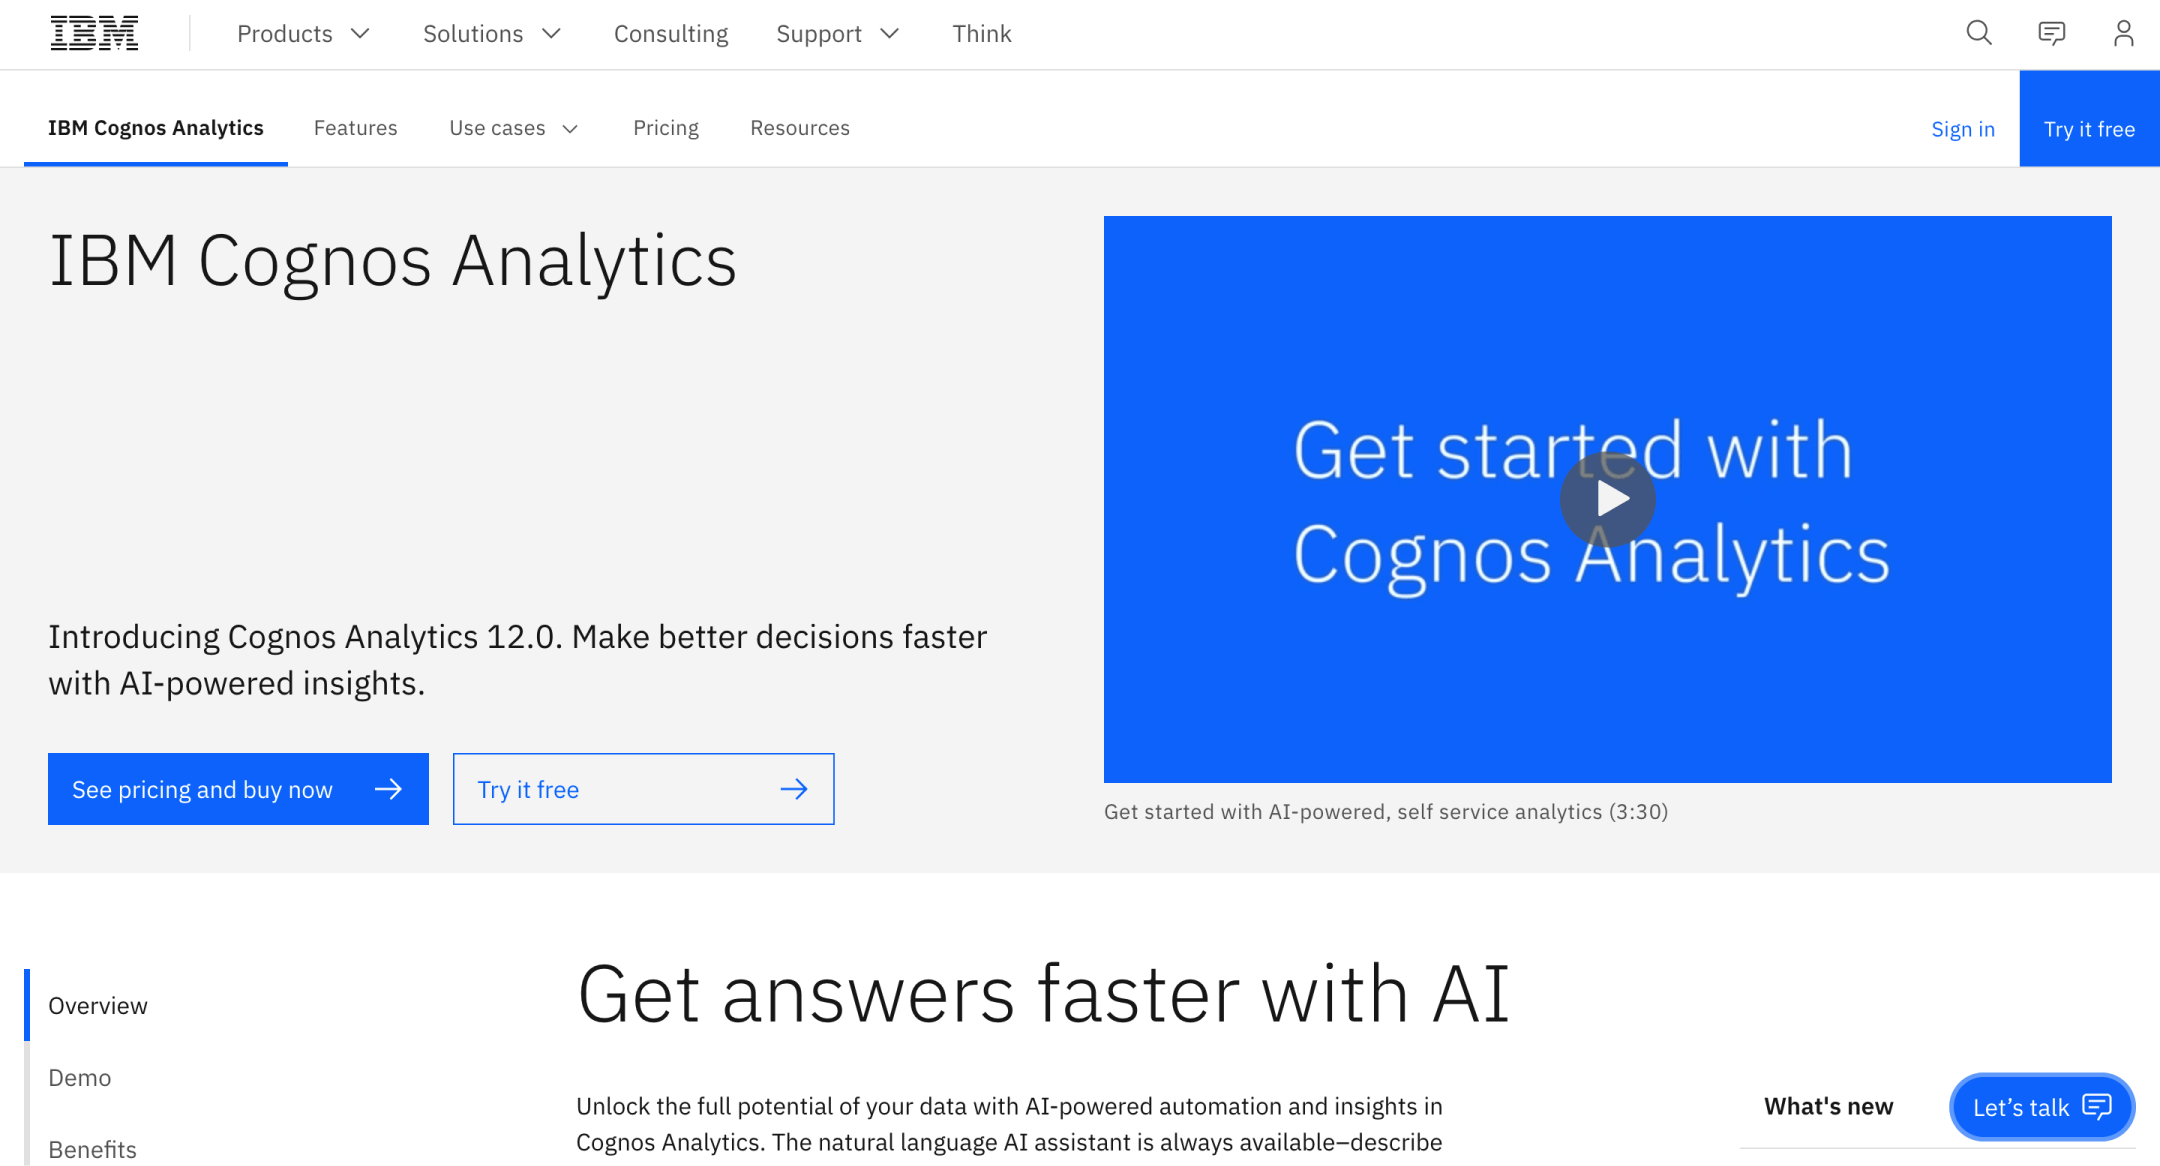 The screenshot demonstrates the interface of IBM Cognos Analytics app